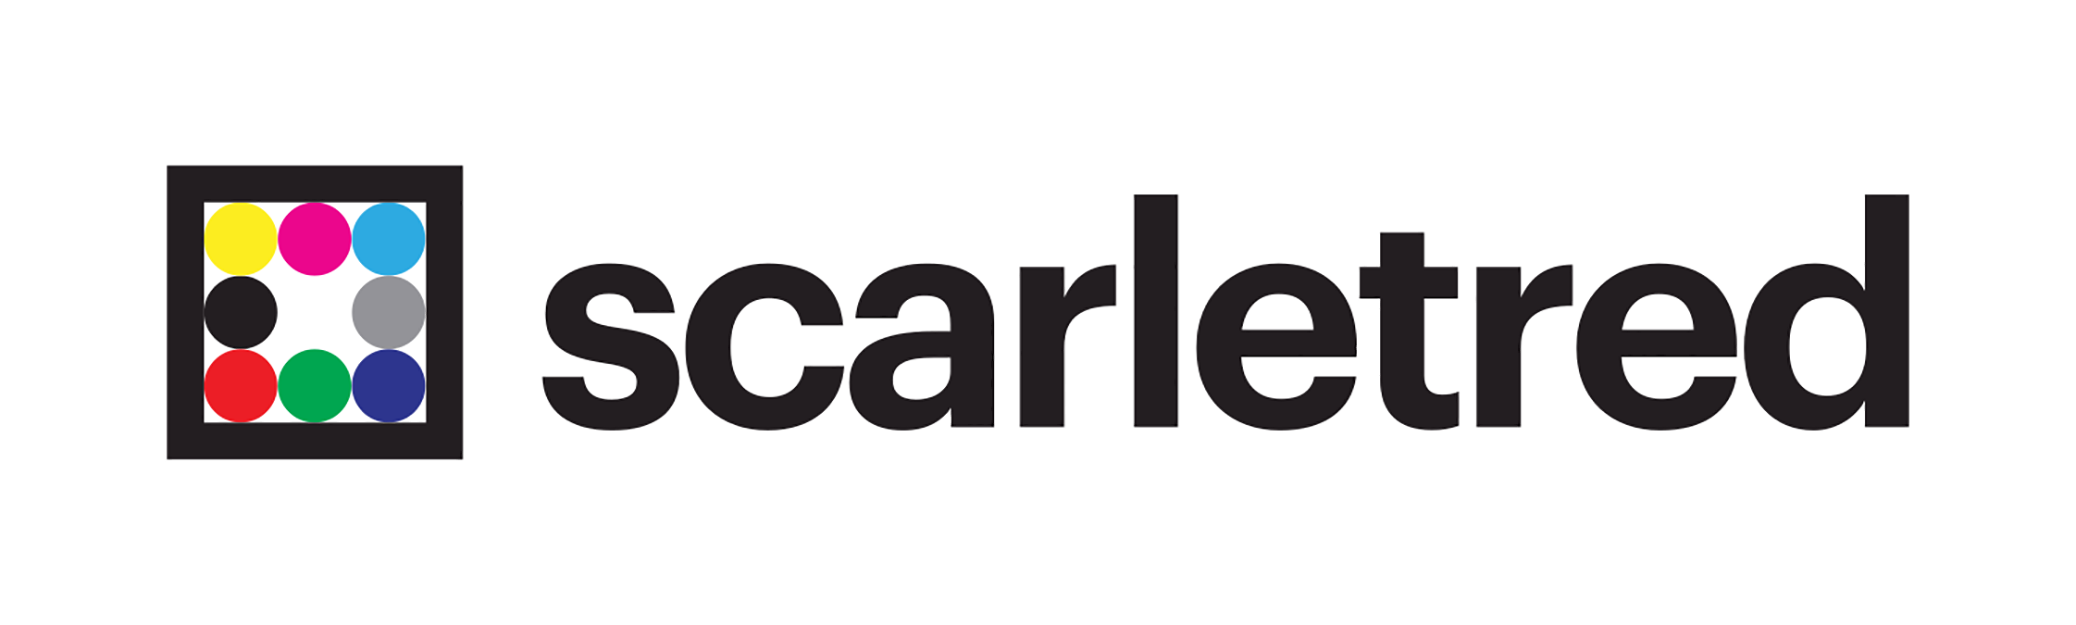 scarletred_logo